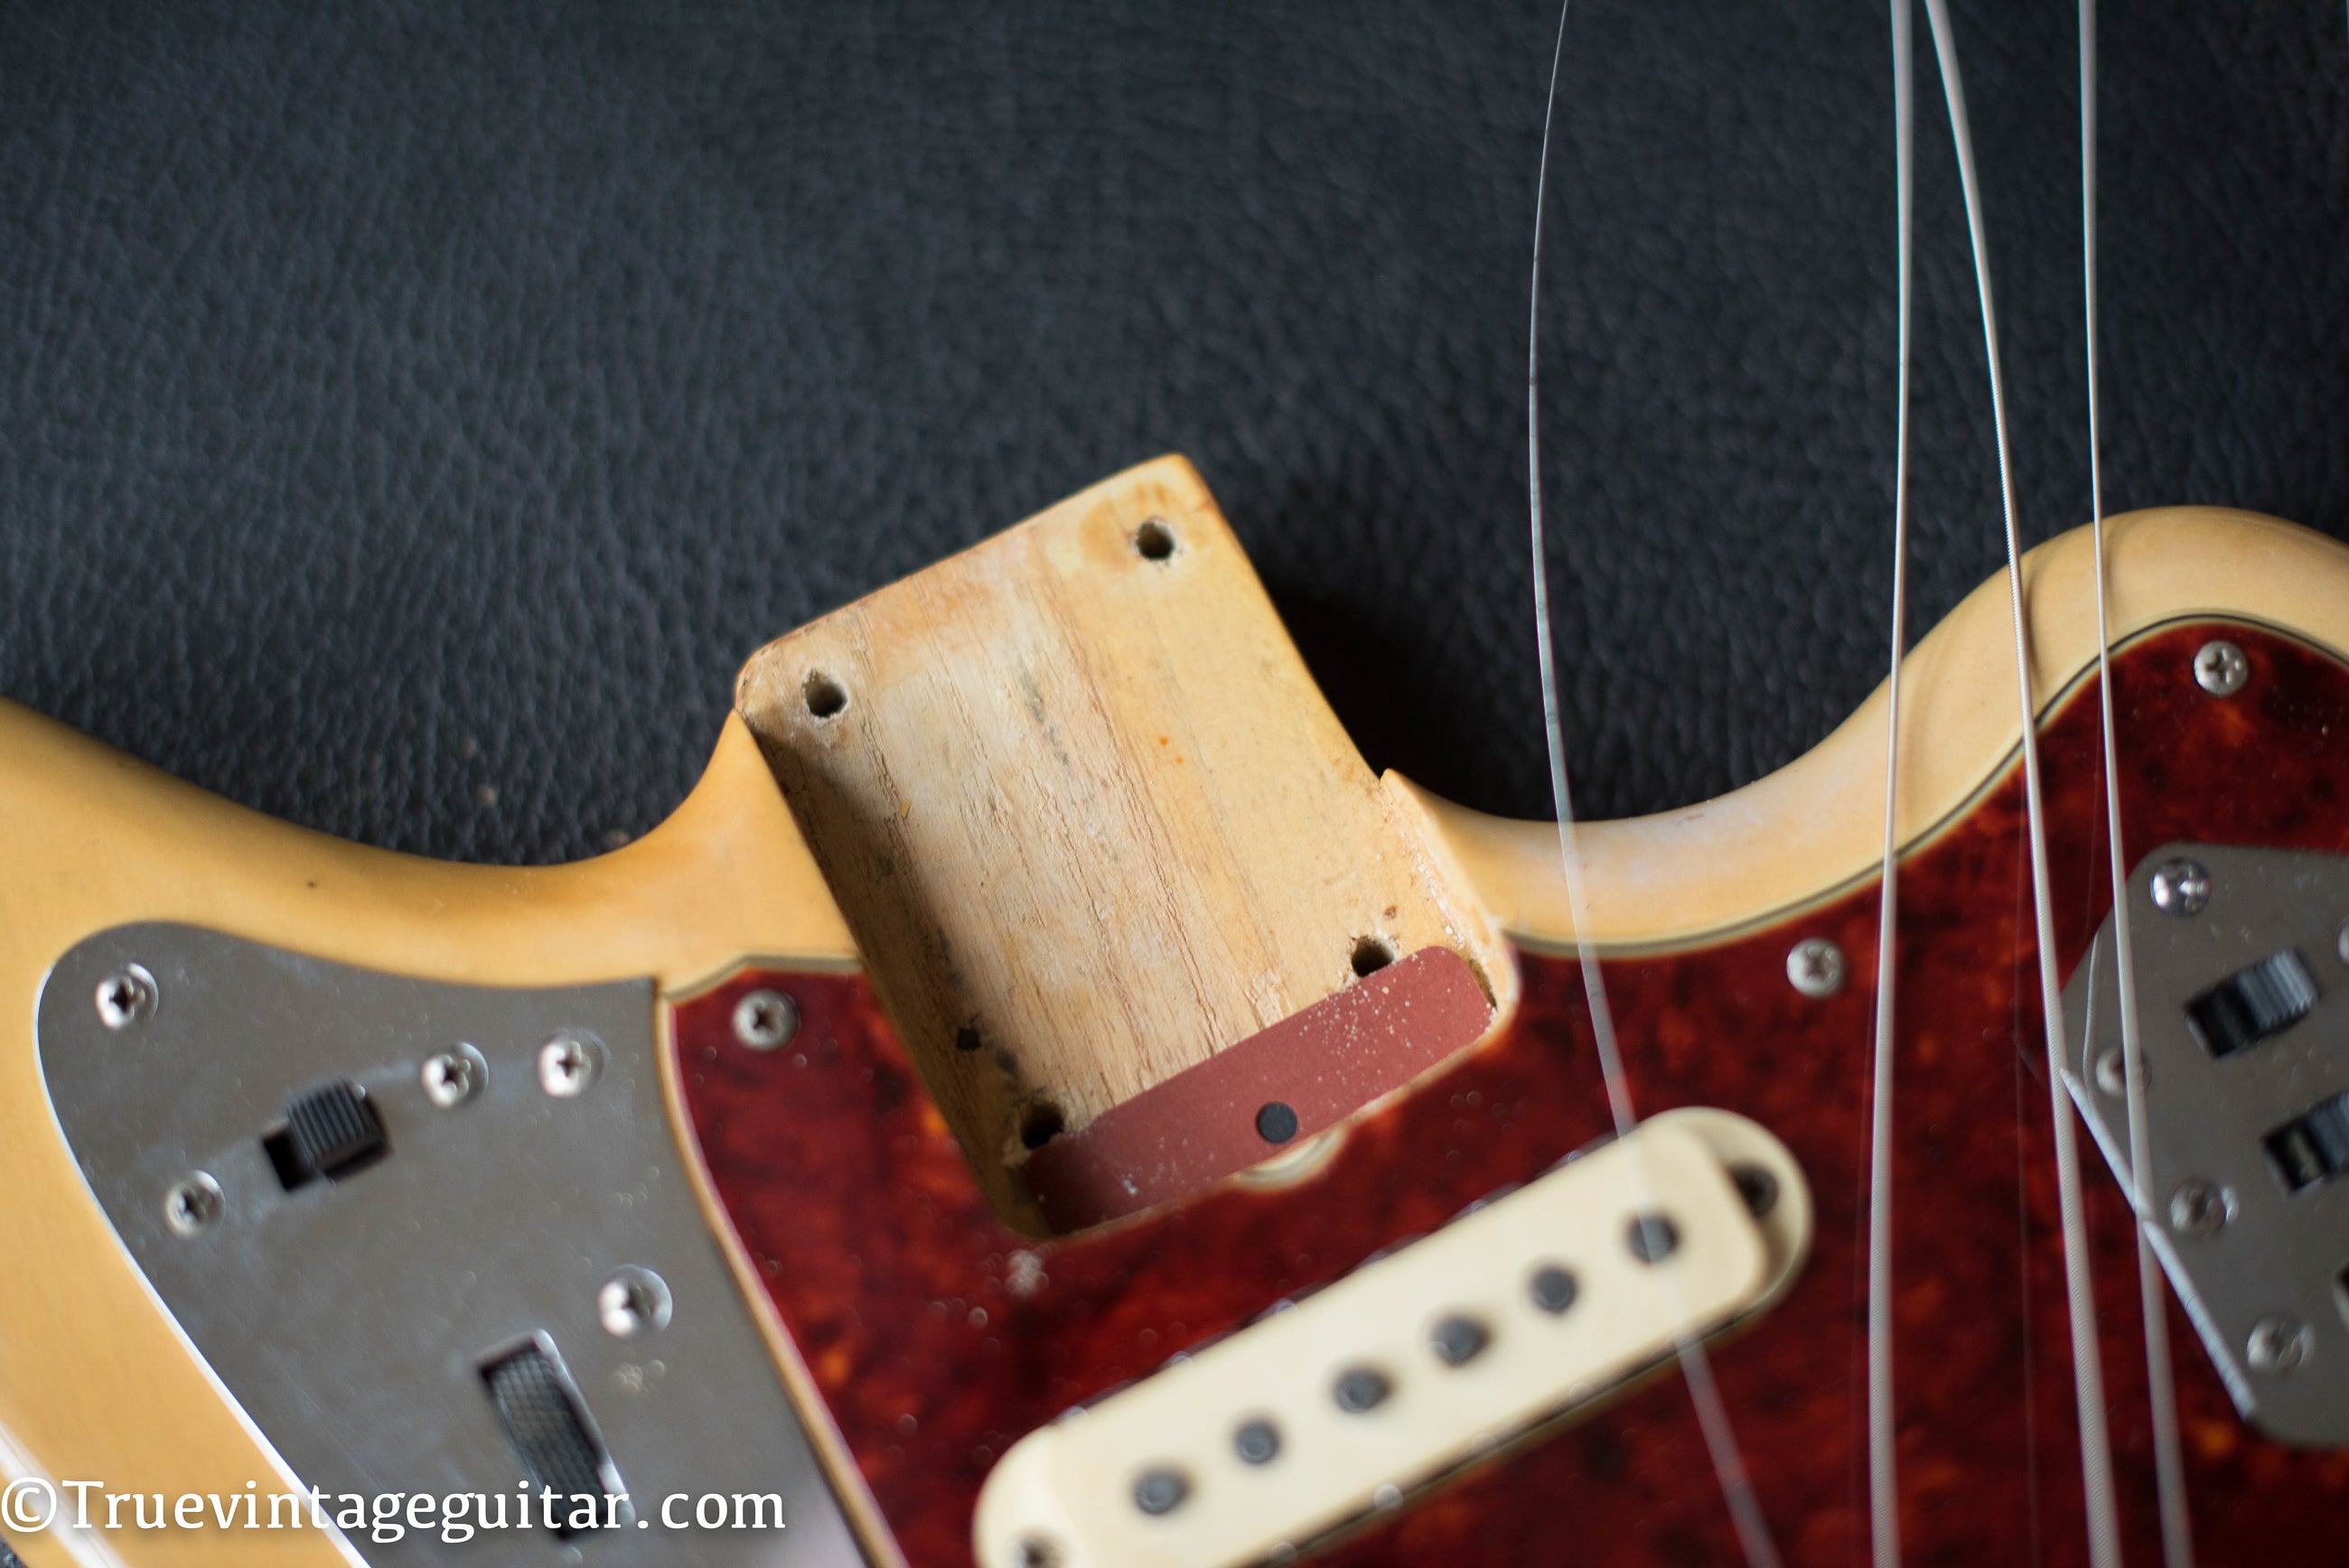 Neck pocket, paint stick mark, Vintage 1964 Fender Jaguar electric guitar Blond finish Ash body